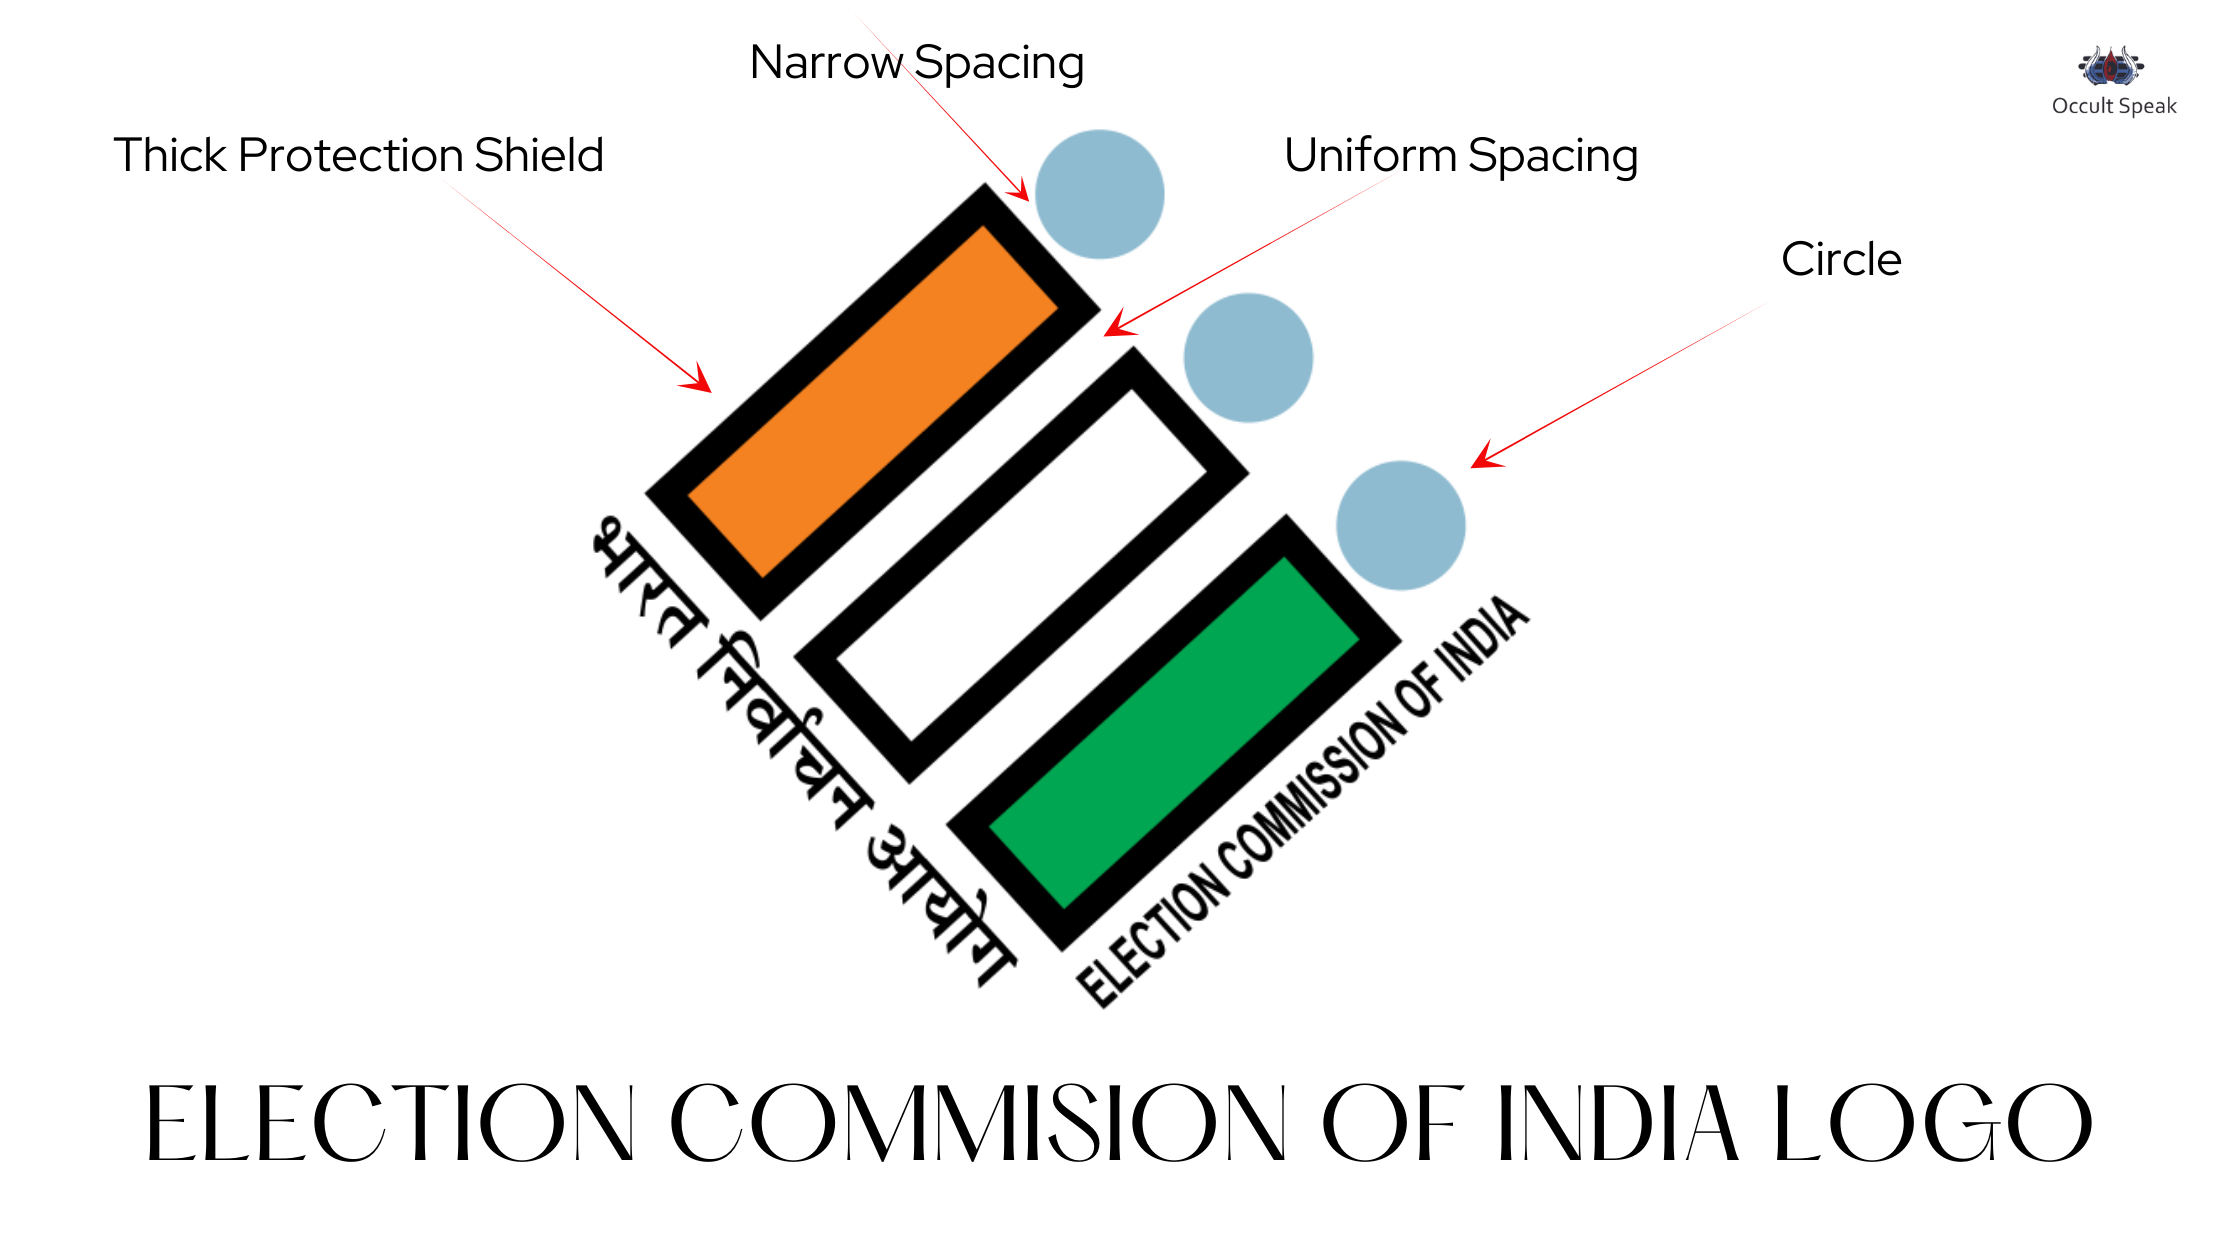 Election Commission of India Logo Analysis